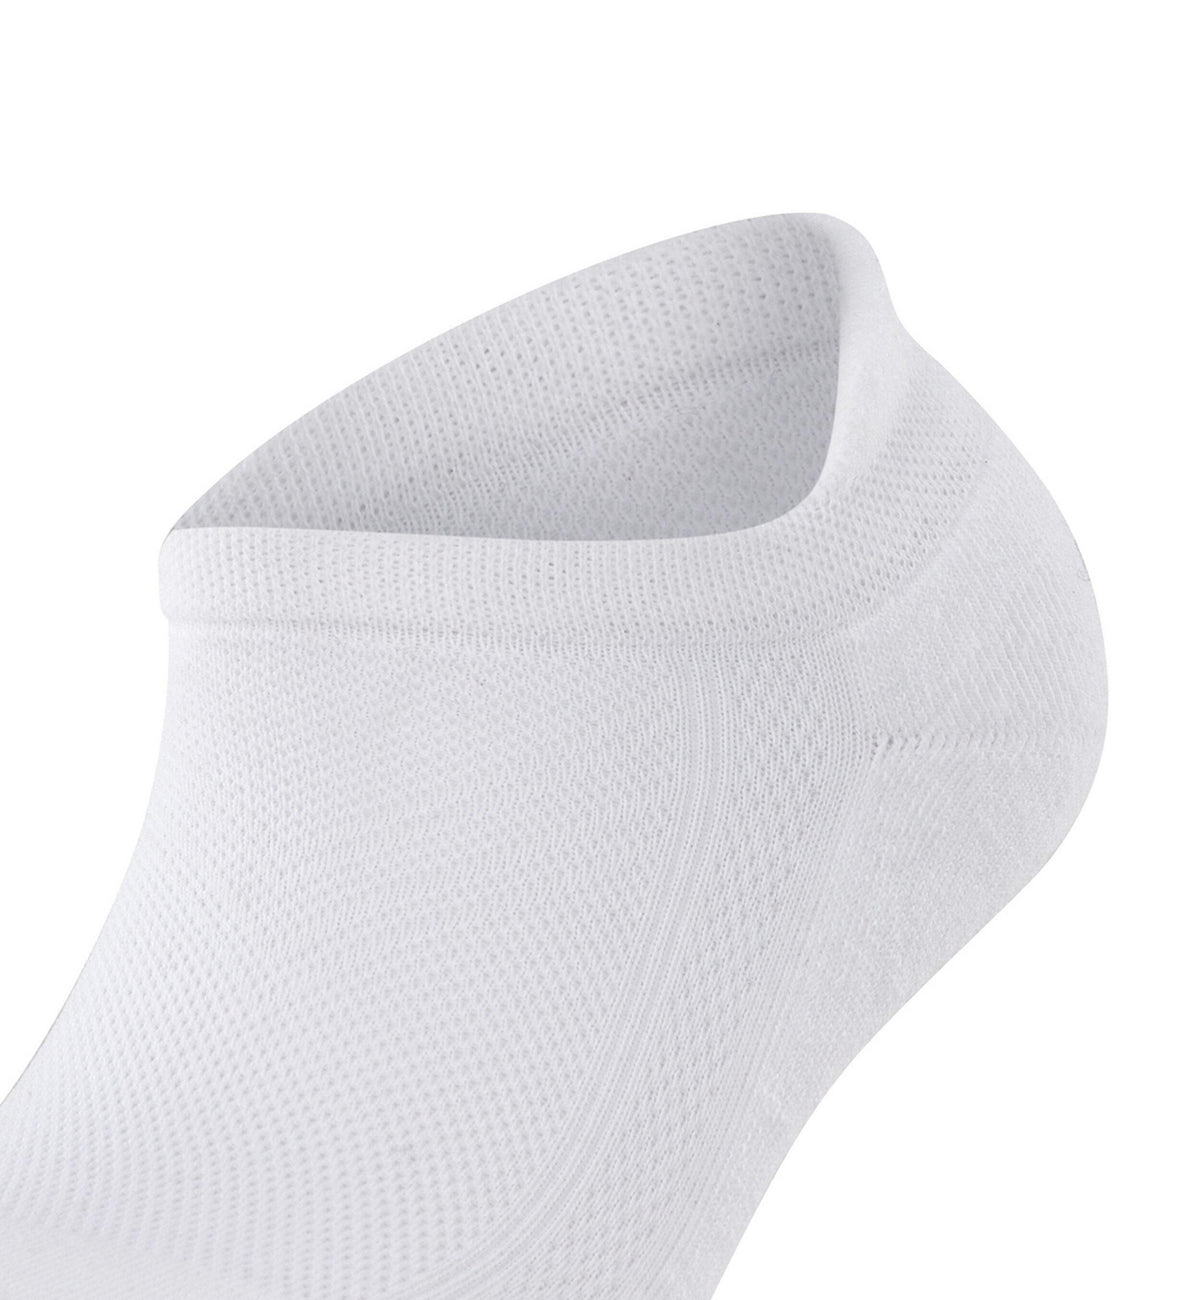 FALKE Cool Kick Sneaker Socks (46331),6.5/7.5,White - White,6.5/7.5